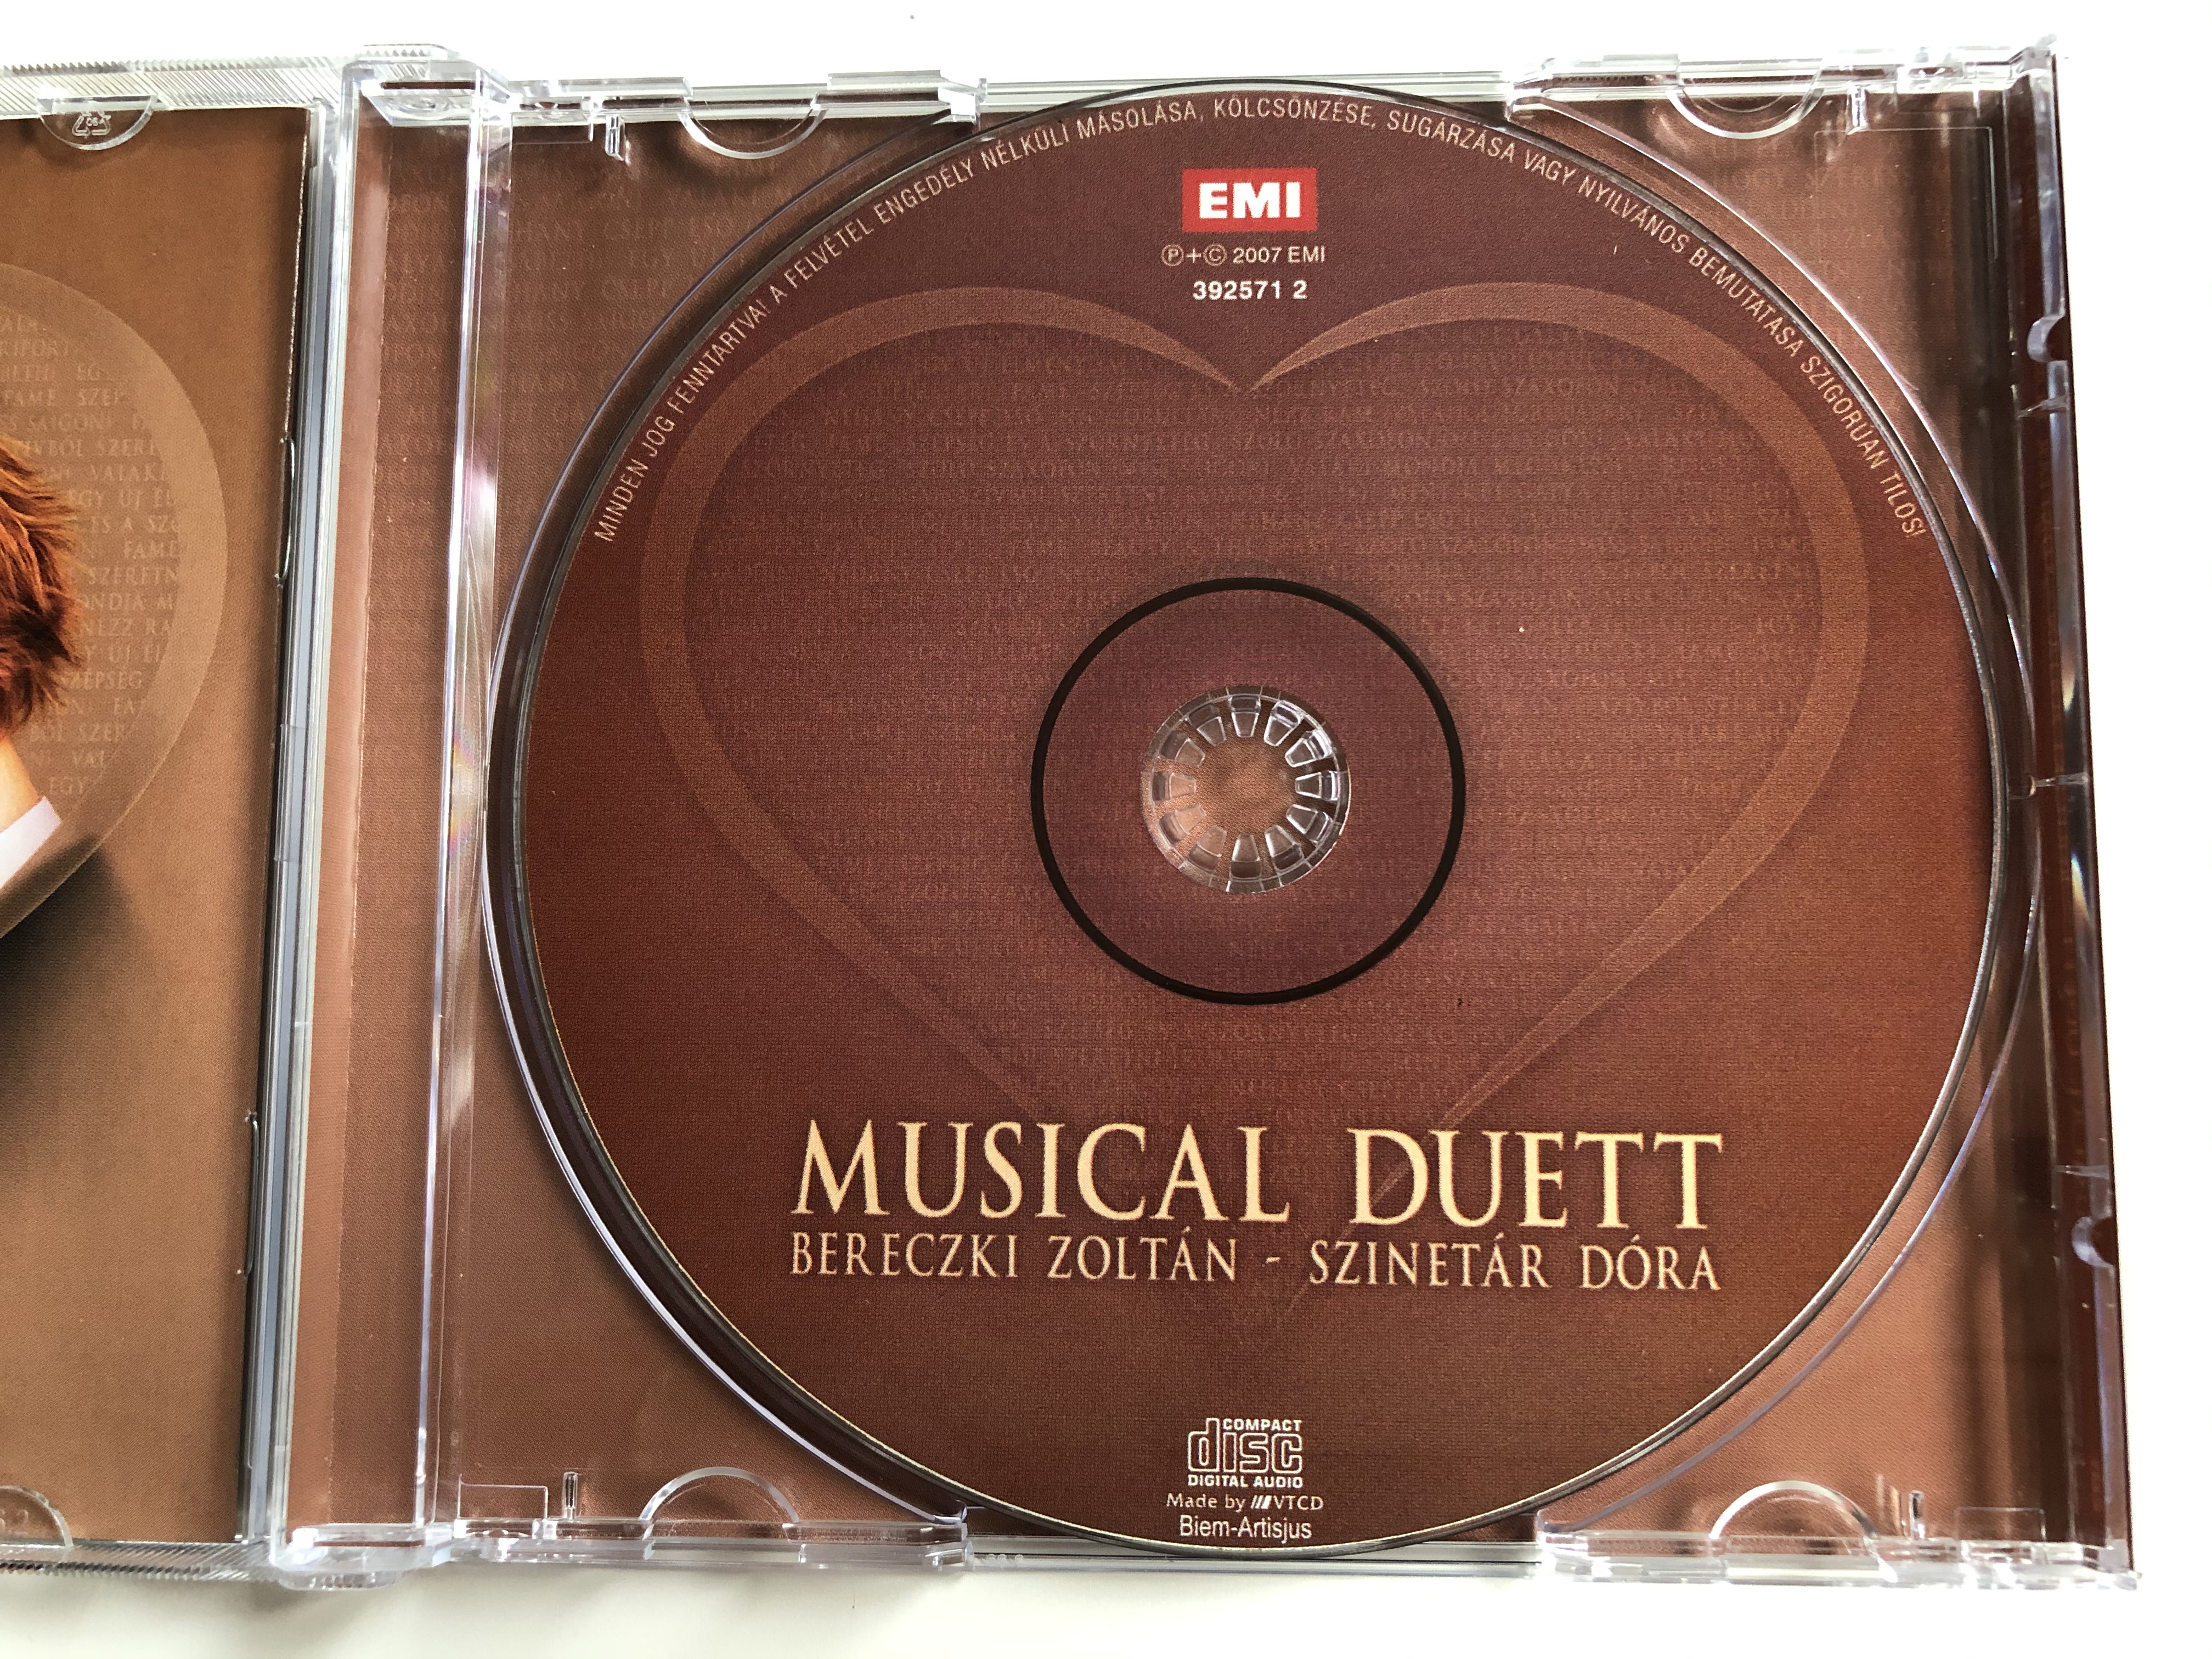 bereczki-zolt-n-szinet-r-d-ra-musical-duett-emi-audio-cd-2007-392571-2-2-.jpg